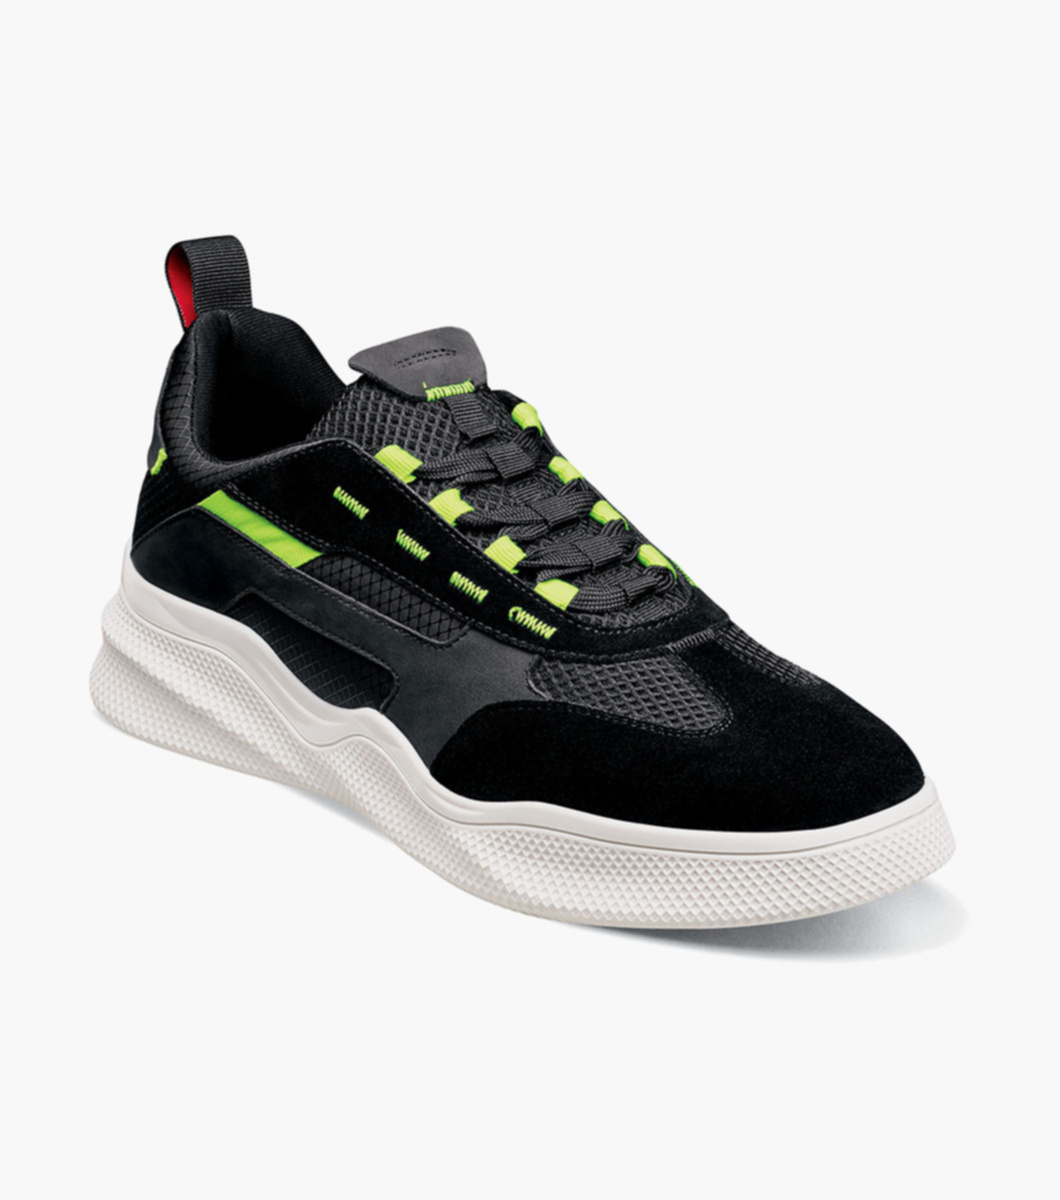 Fisker Dynamics Mindre Ventura T-Toe Lace Up Sneaker Clearance Men's Shoes | Stacyadams.com